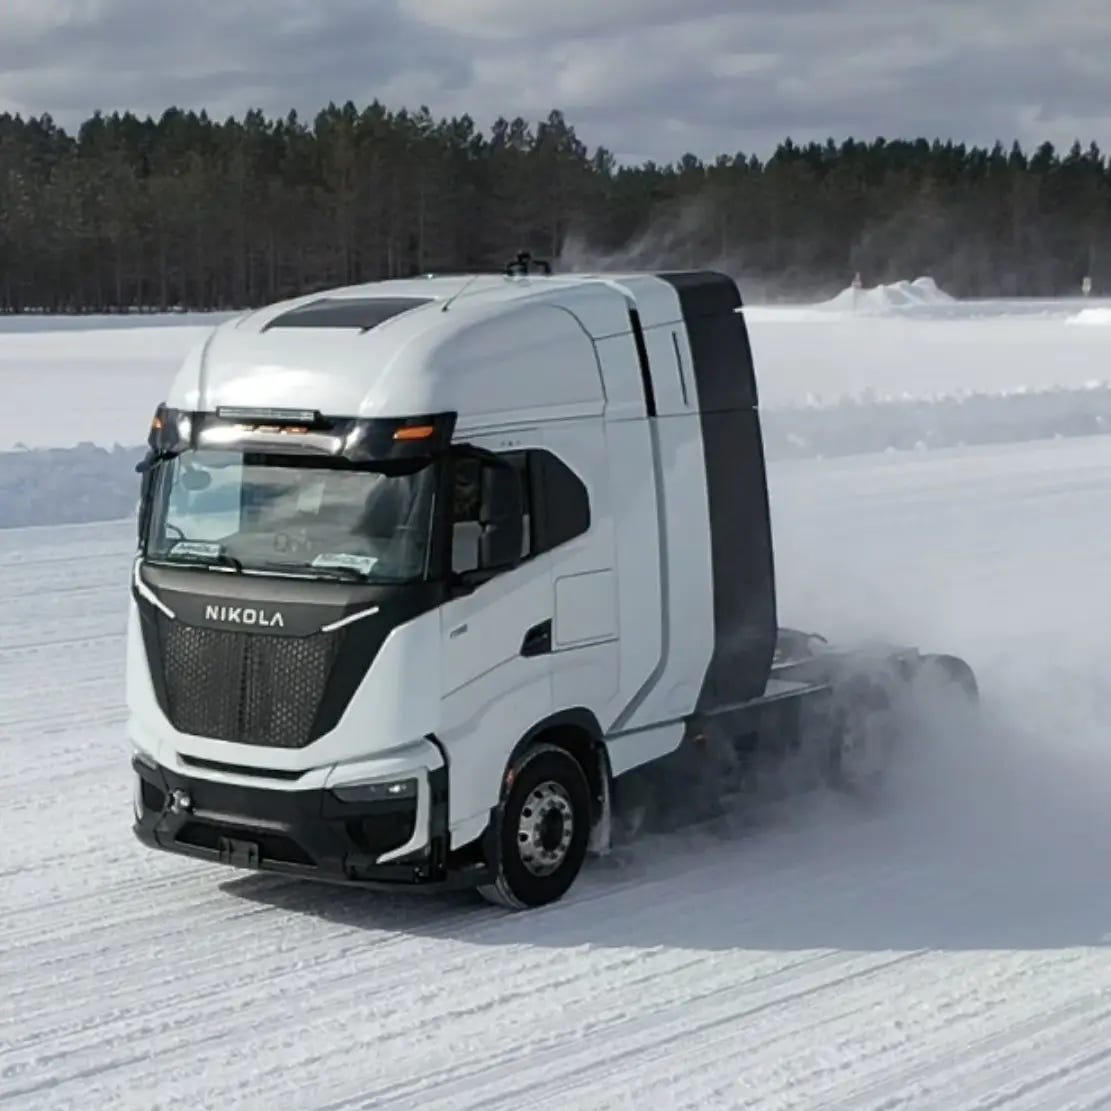 Nikola FCEV driving on a snowy road in a winter landscape.